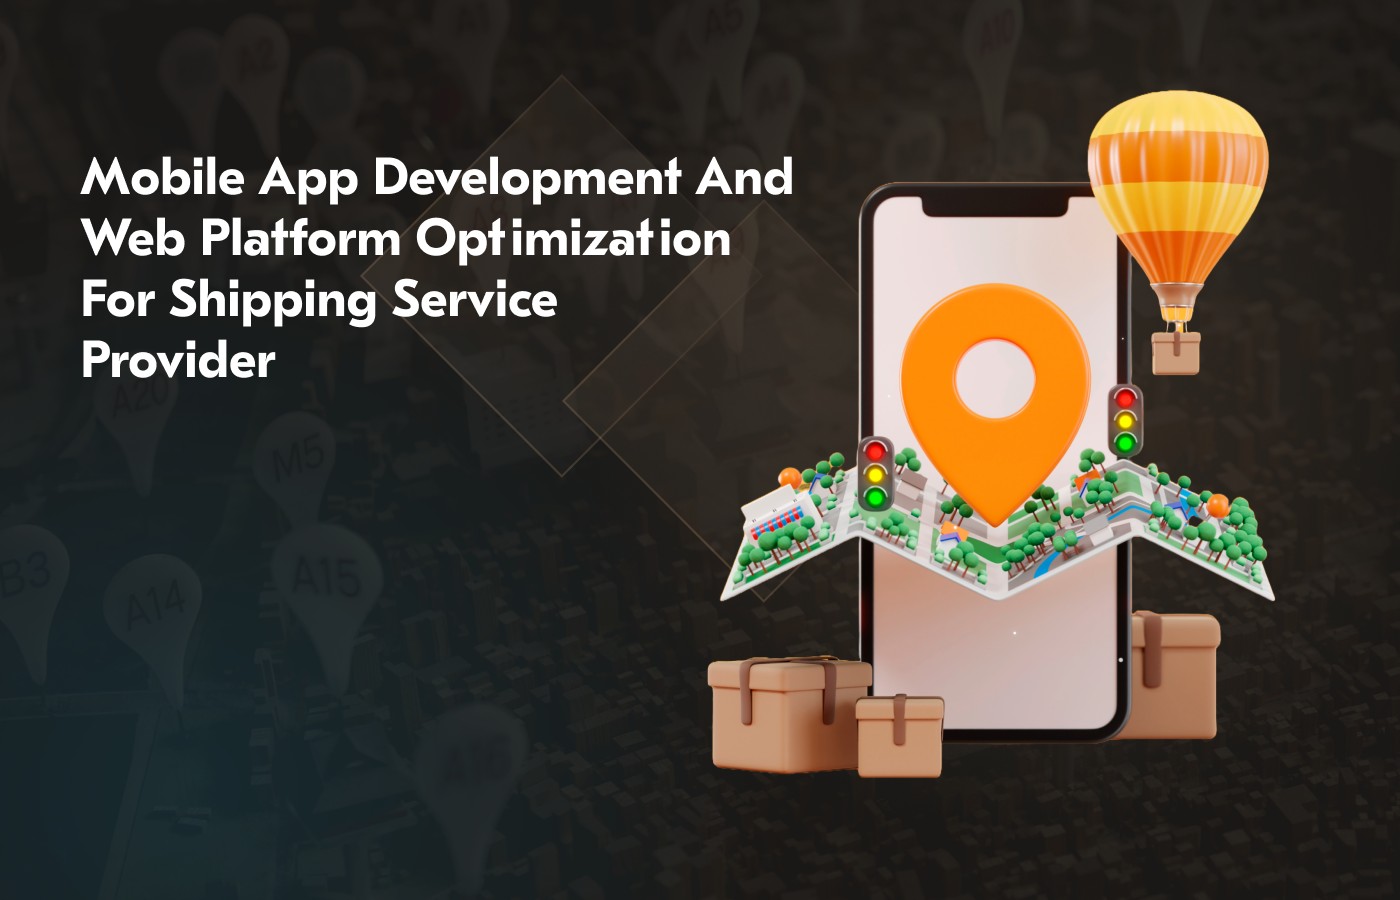 Mobile App Development And Web Platform Optimization For Shipping Service Provider